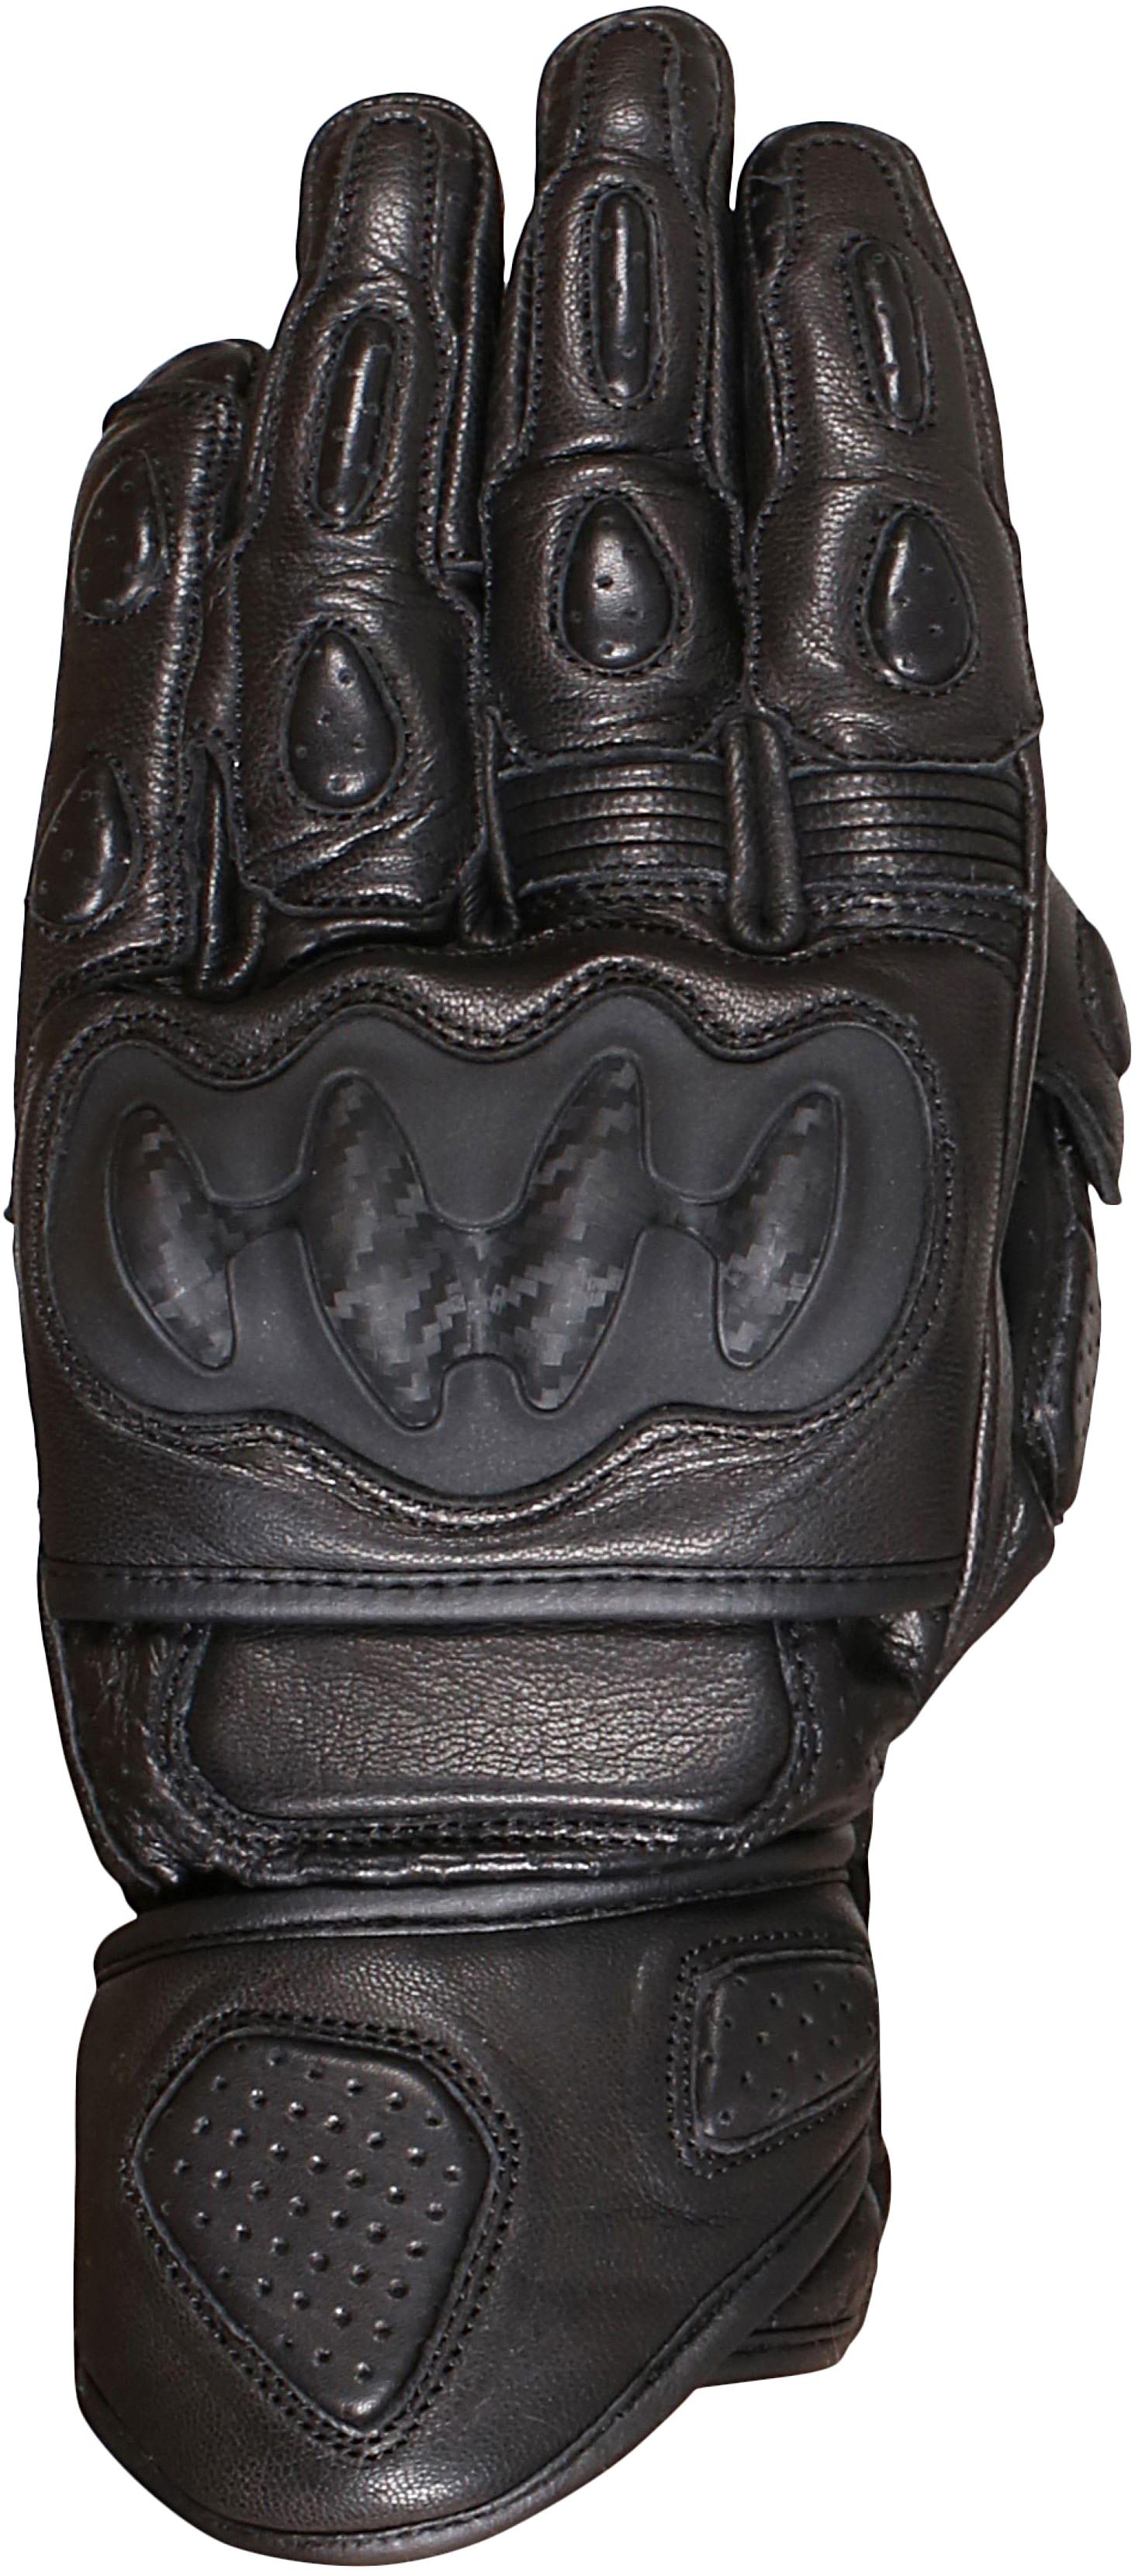 Weise Apex Motorcycle Gloves - Black, Xl